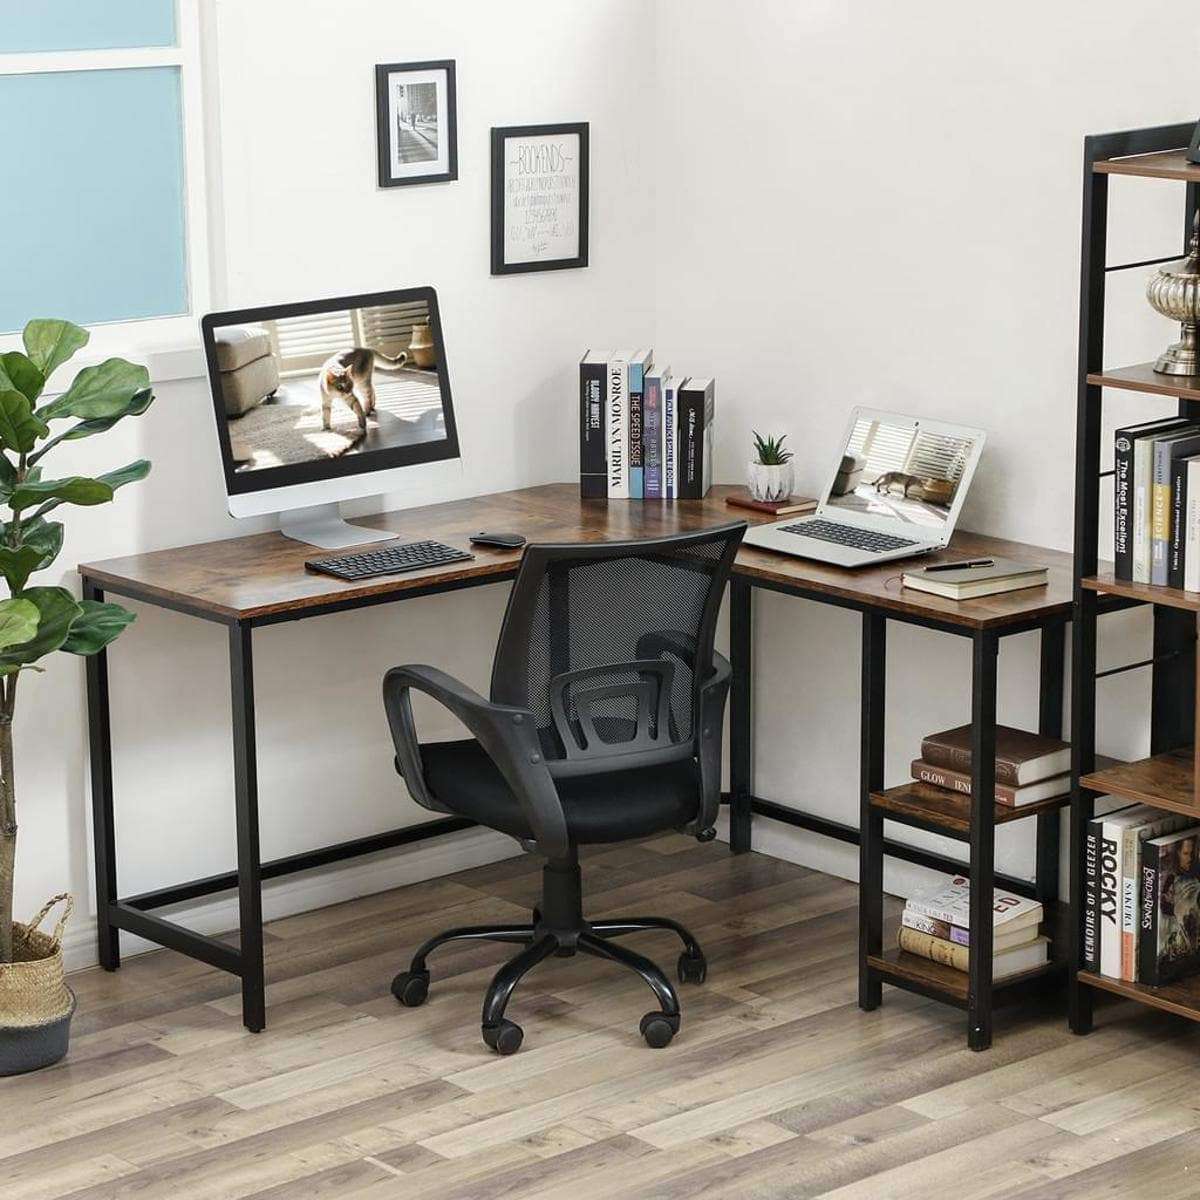 Nancy's Lenox Hill Desk - Work table - Office table - Desks 138 x 138 x 75 cm